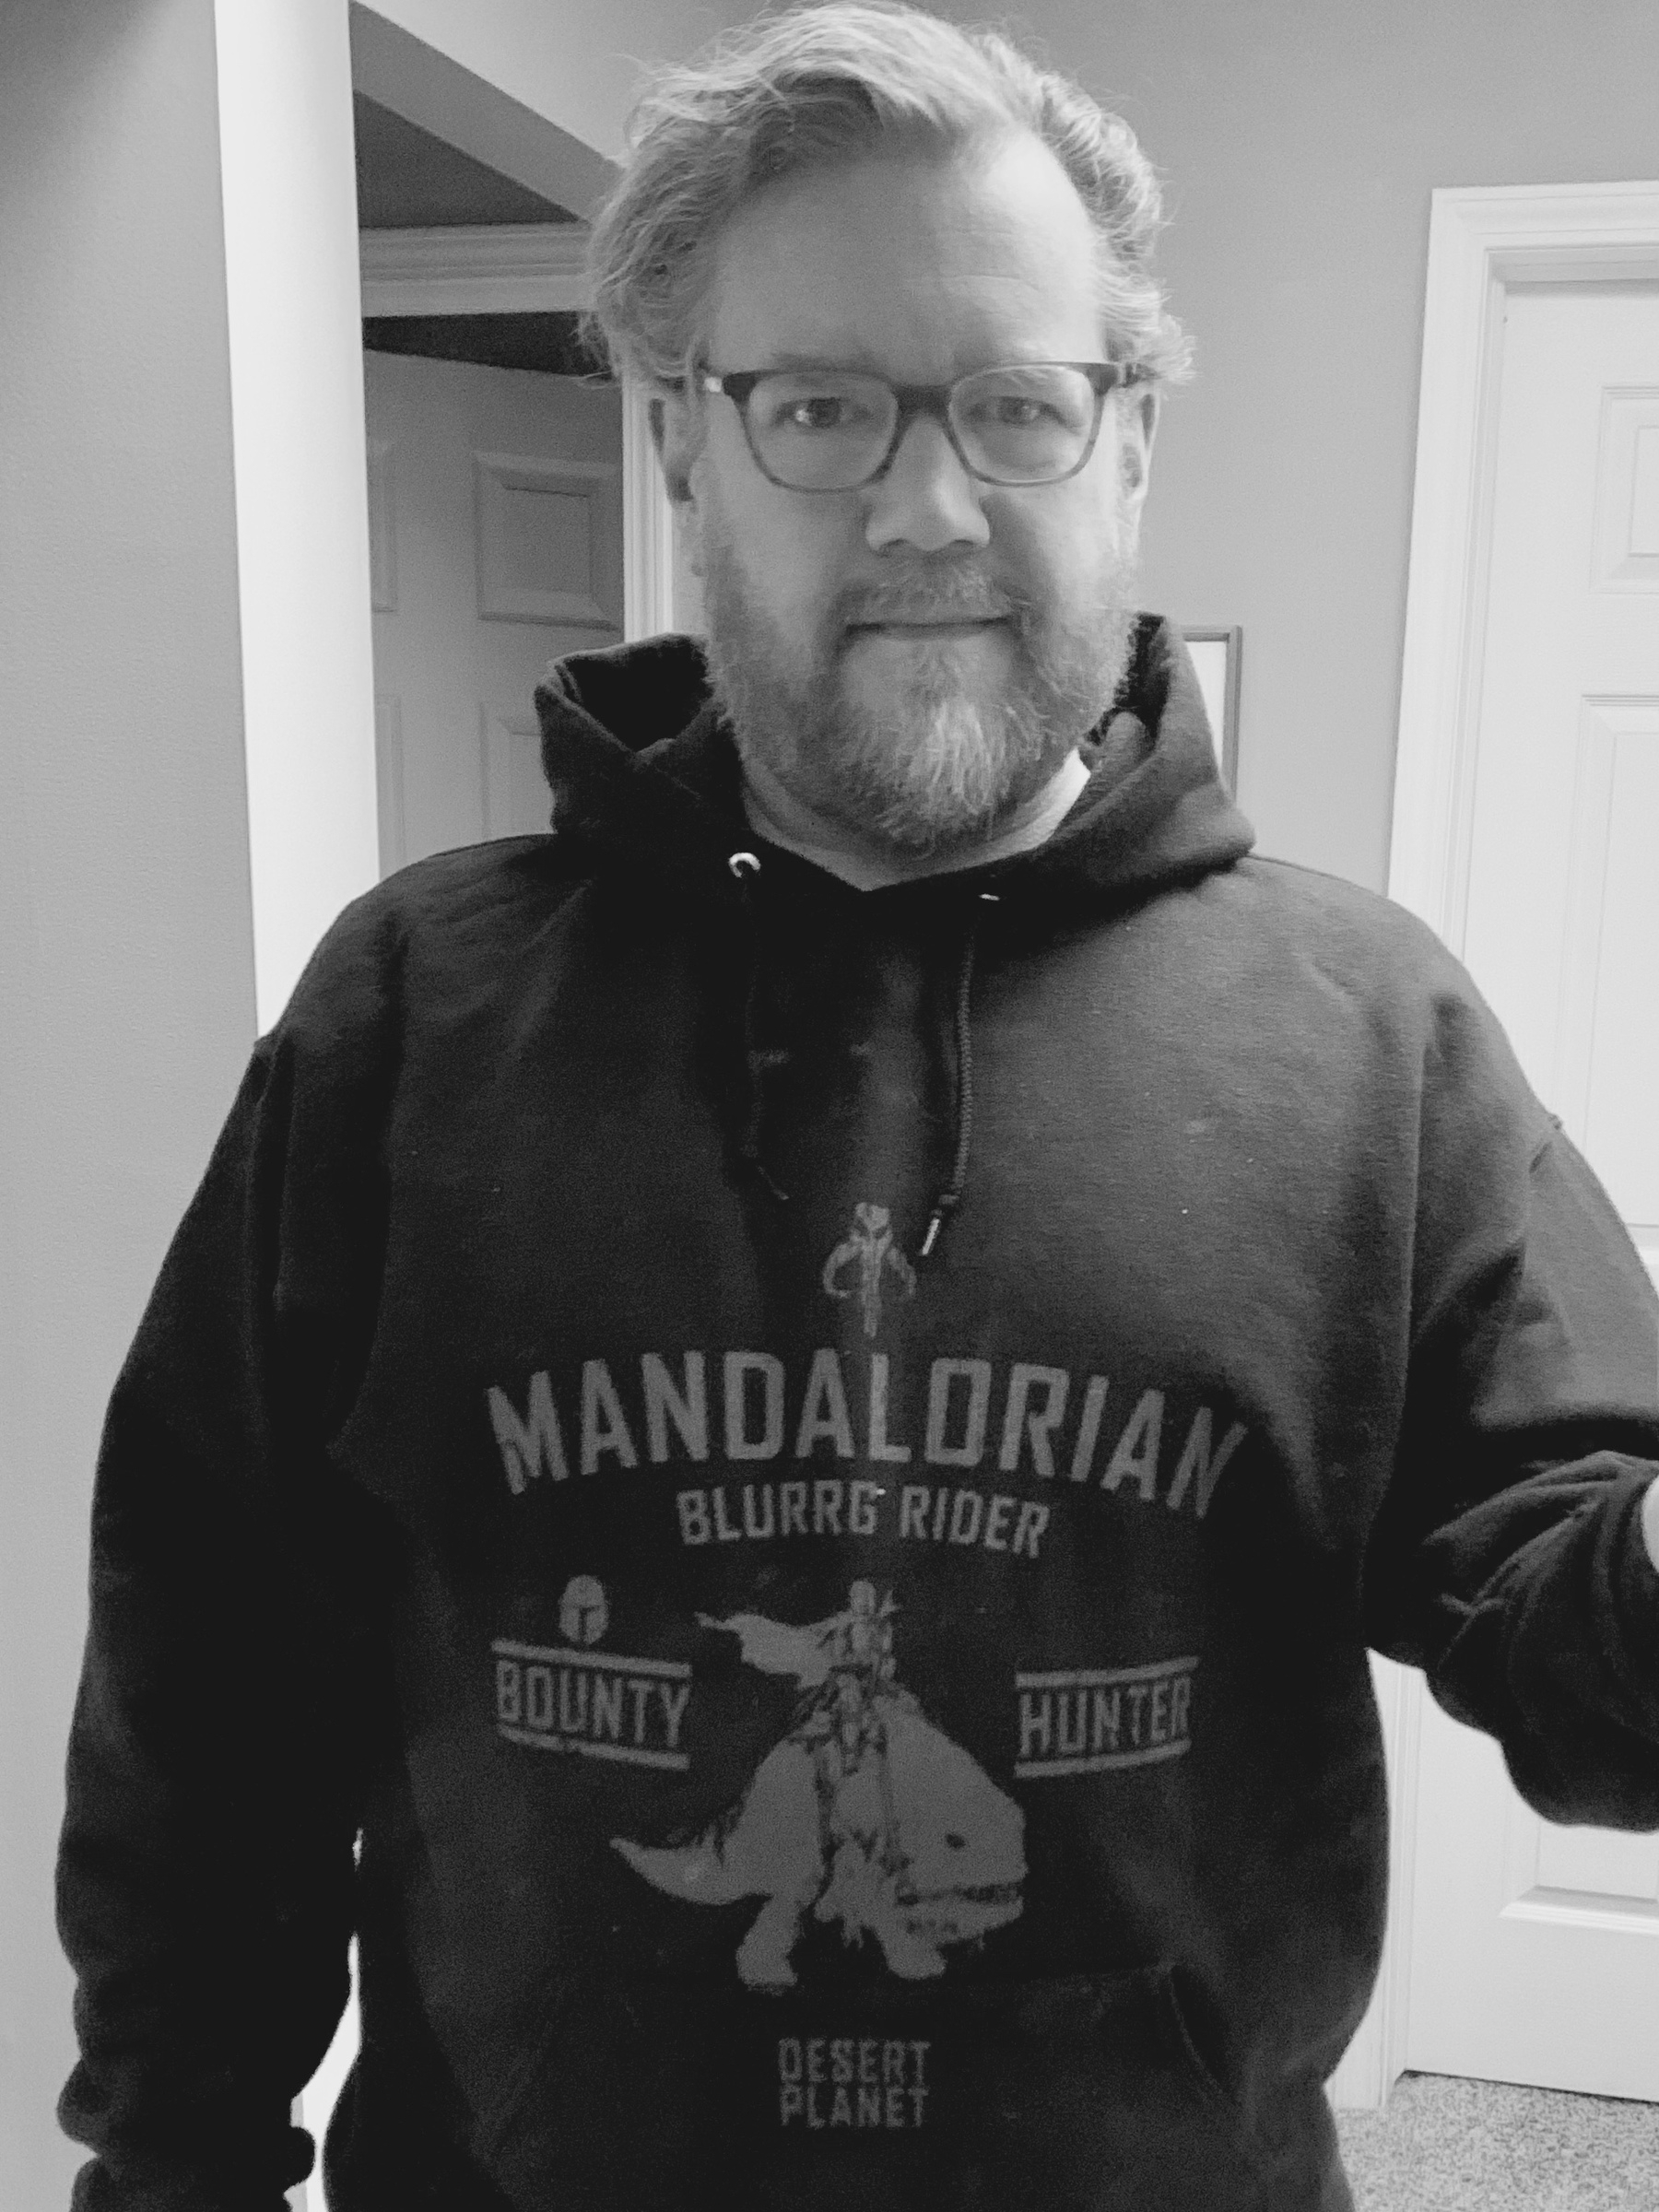 Selfie of me wearing a Mandalorian sweatshirt